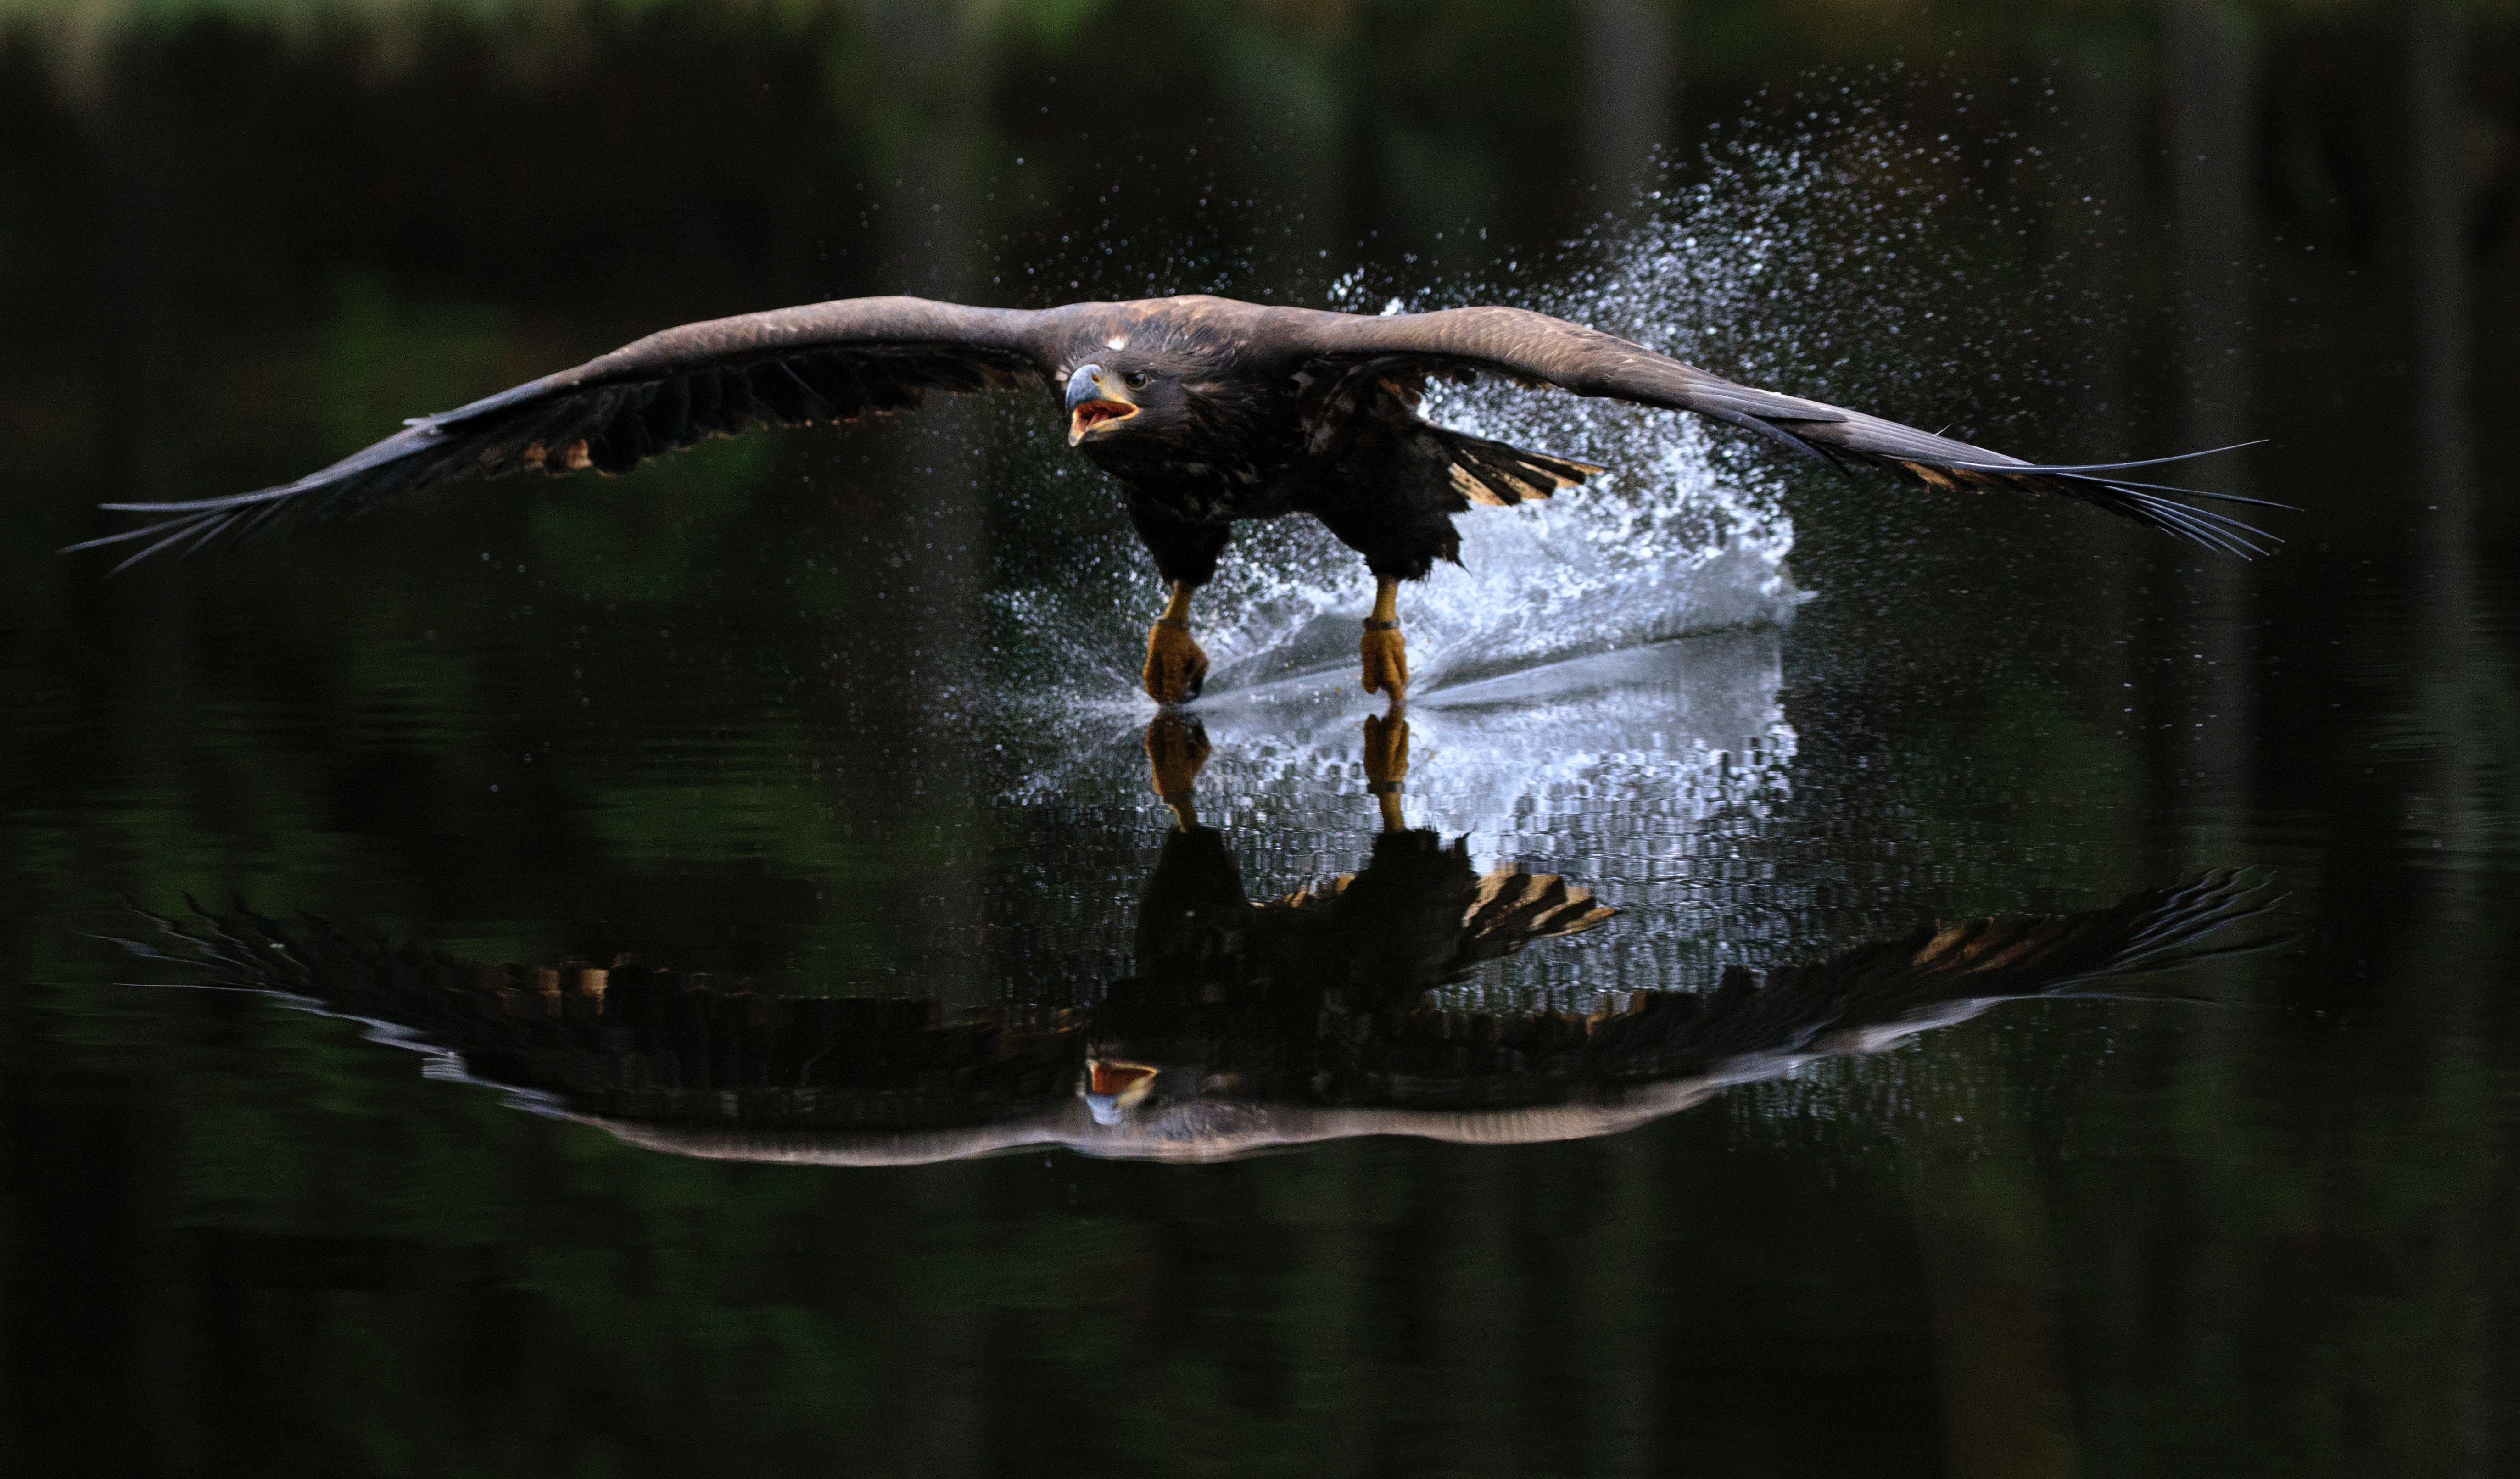 458828 descargar imagen animales, águila, ave, vuelo, reflejo, agua, aves: fondos de pantalla y protectores de pantalla gratis